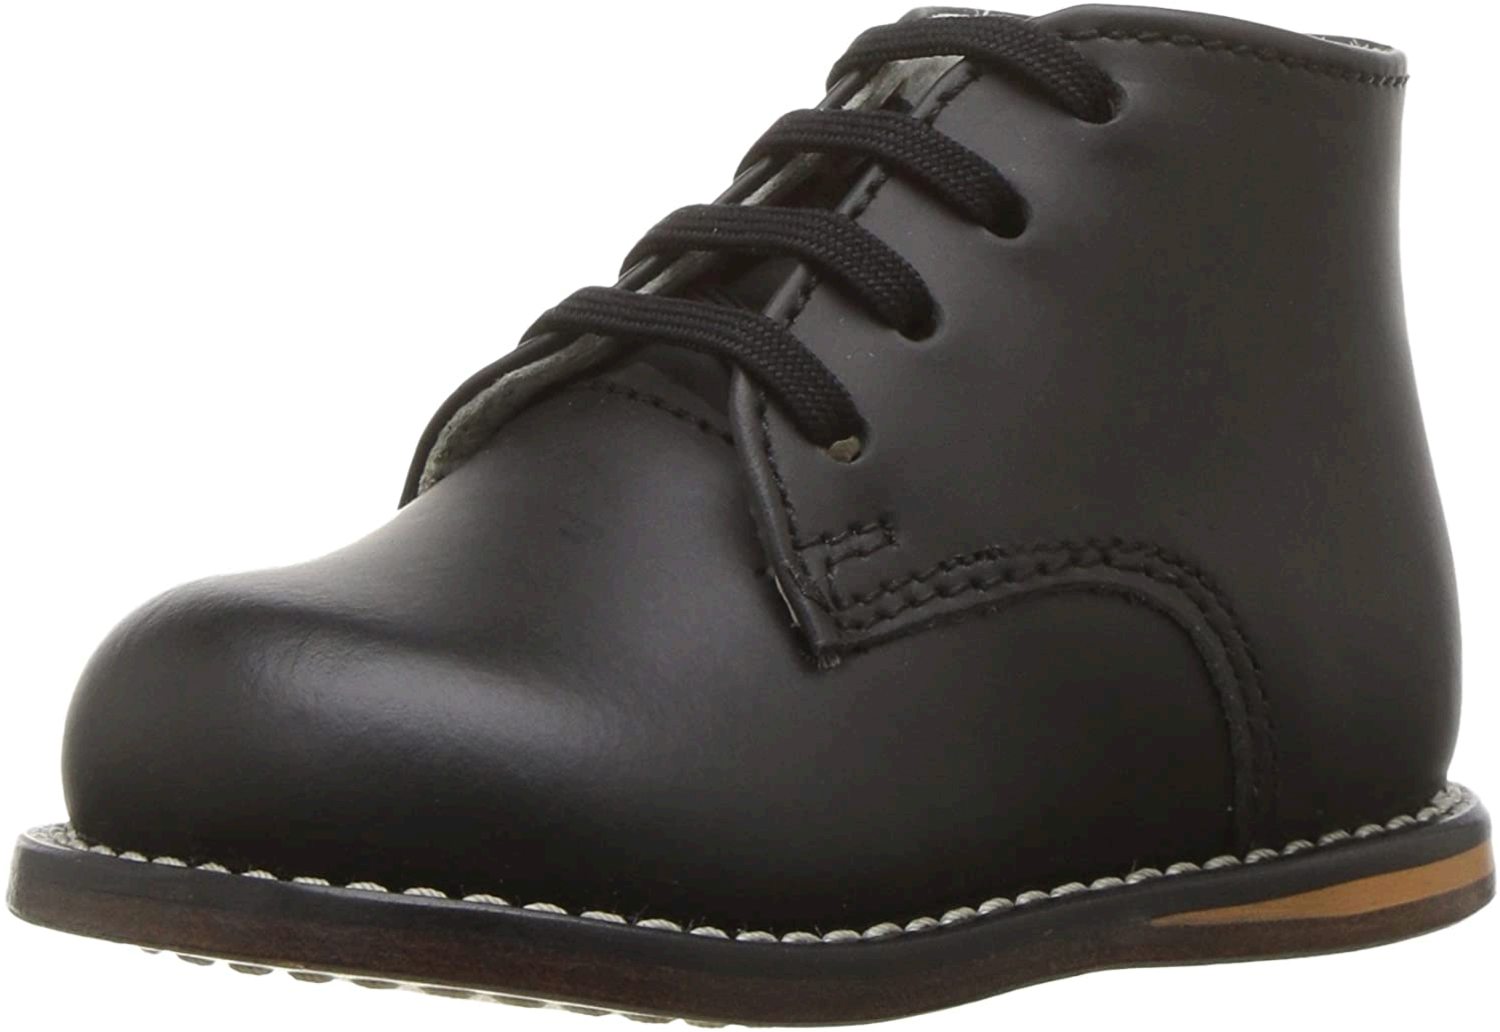 Josmo Kids' Unisex Walking Shoes First Walker, Black, Size